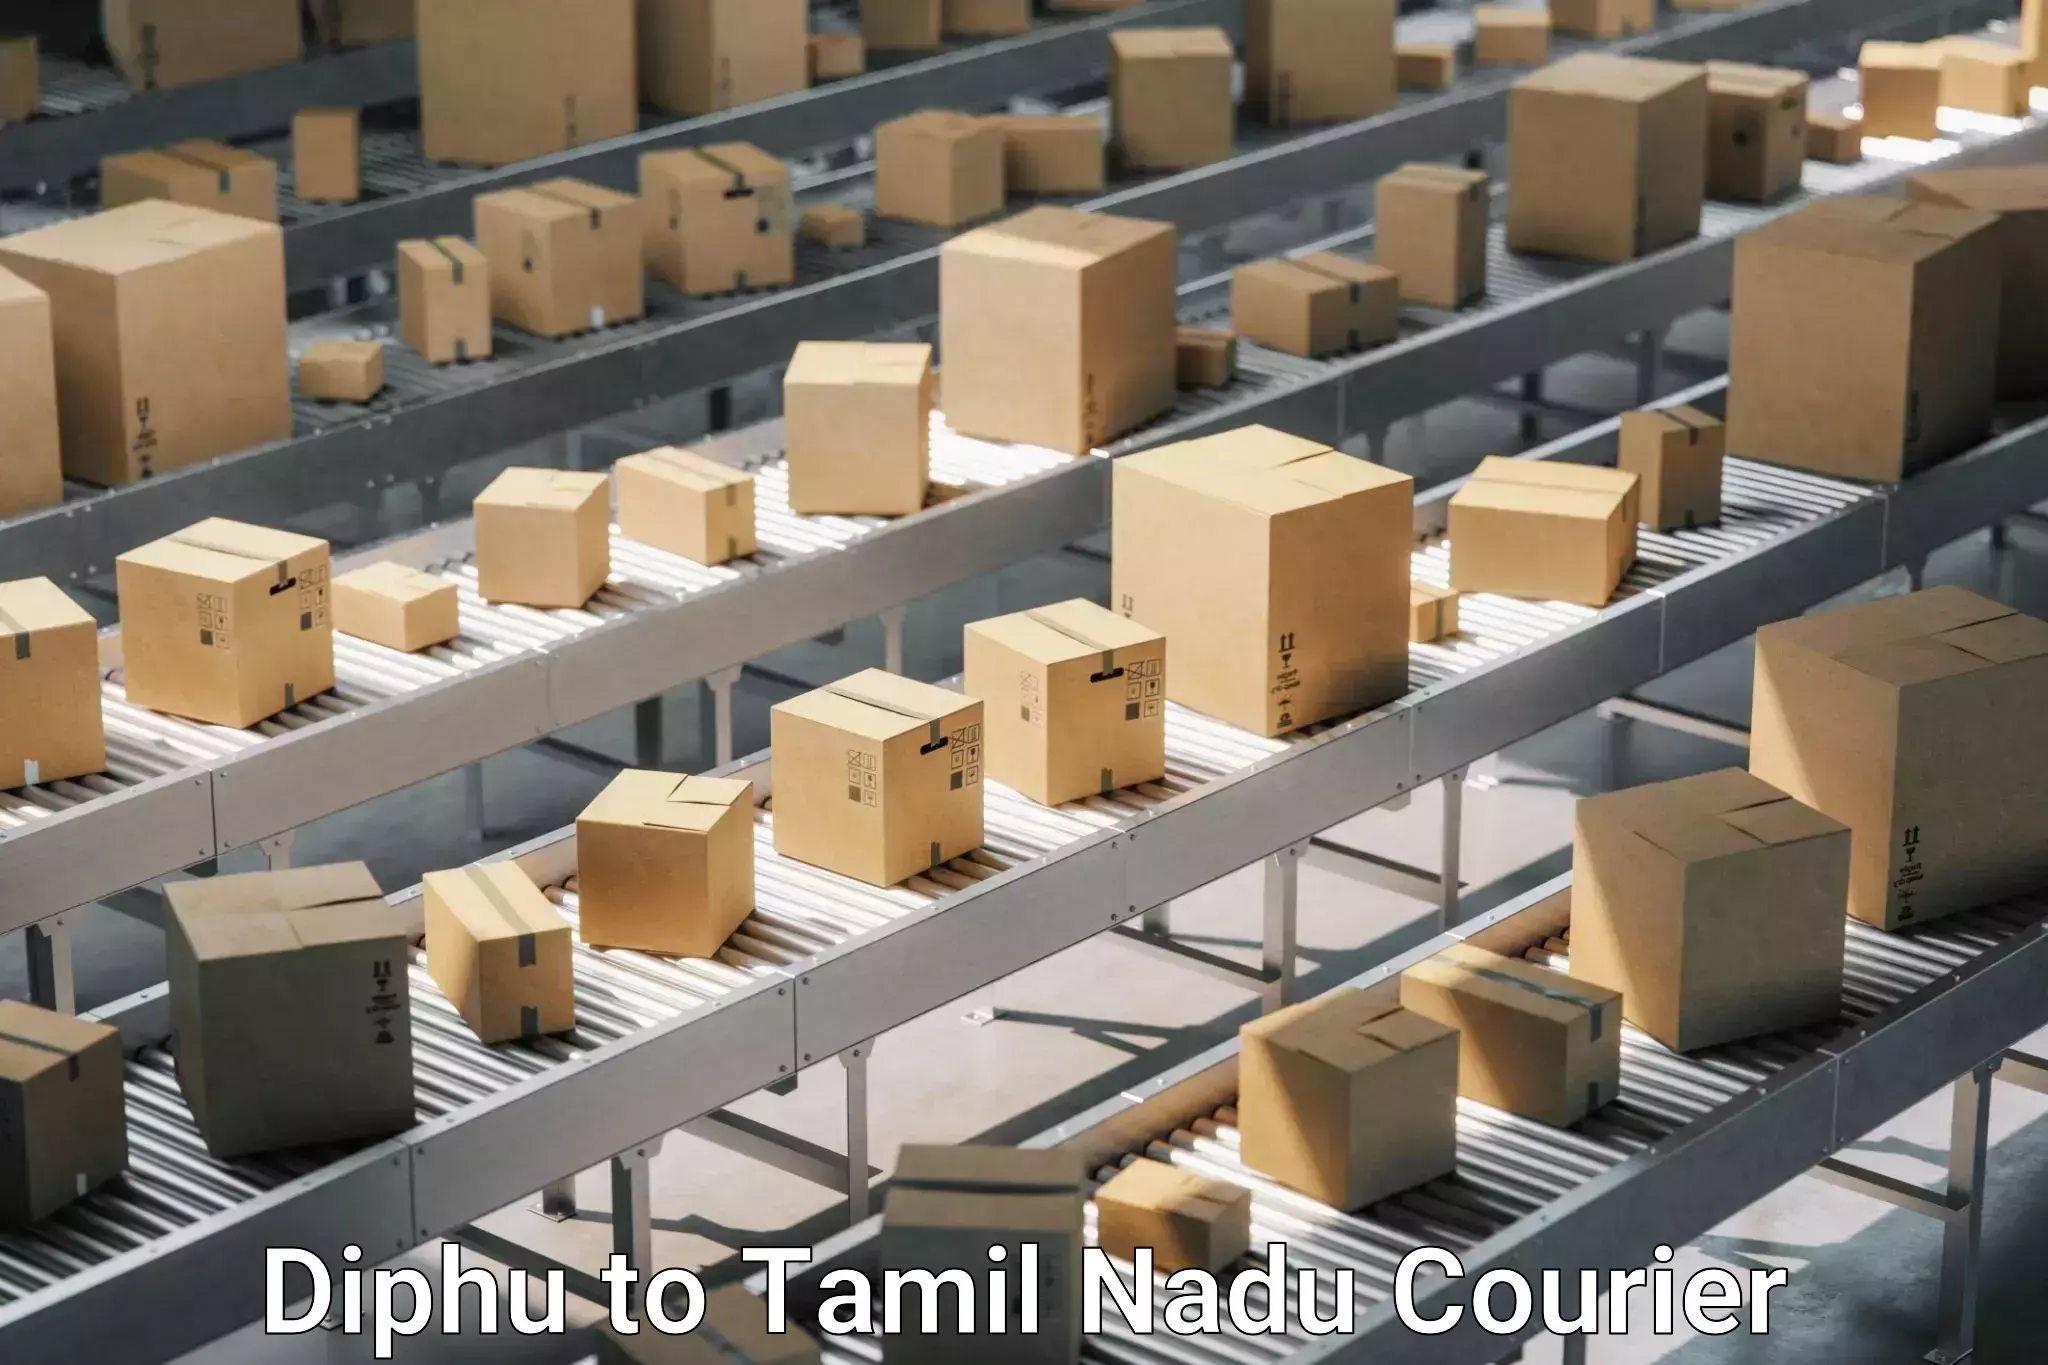 Professional moving company Diphu to Tamil Nadu